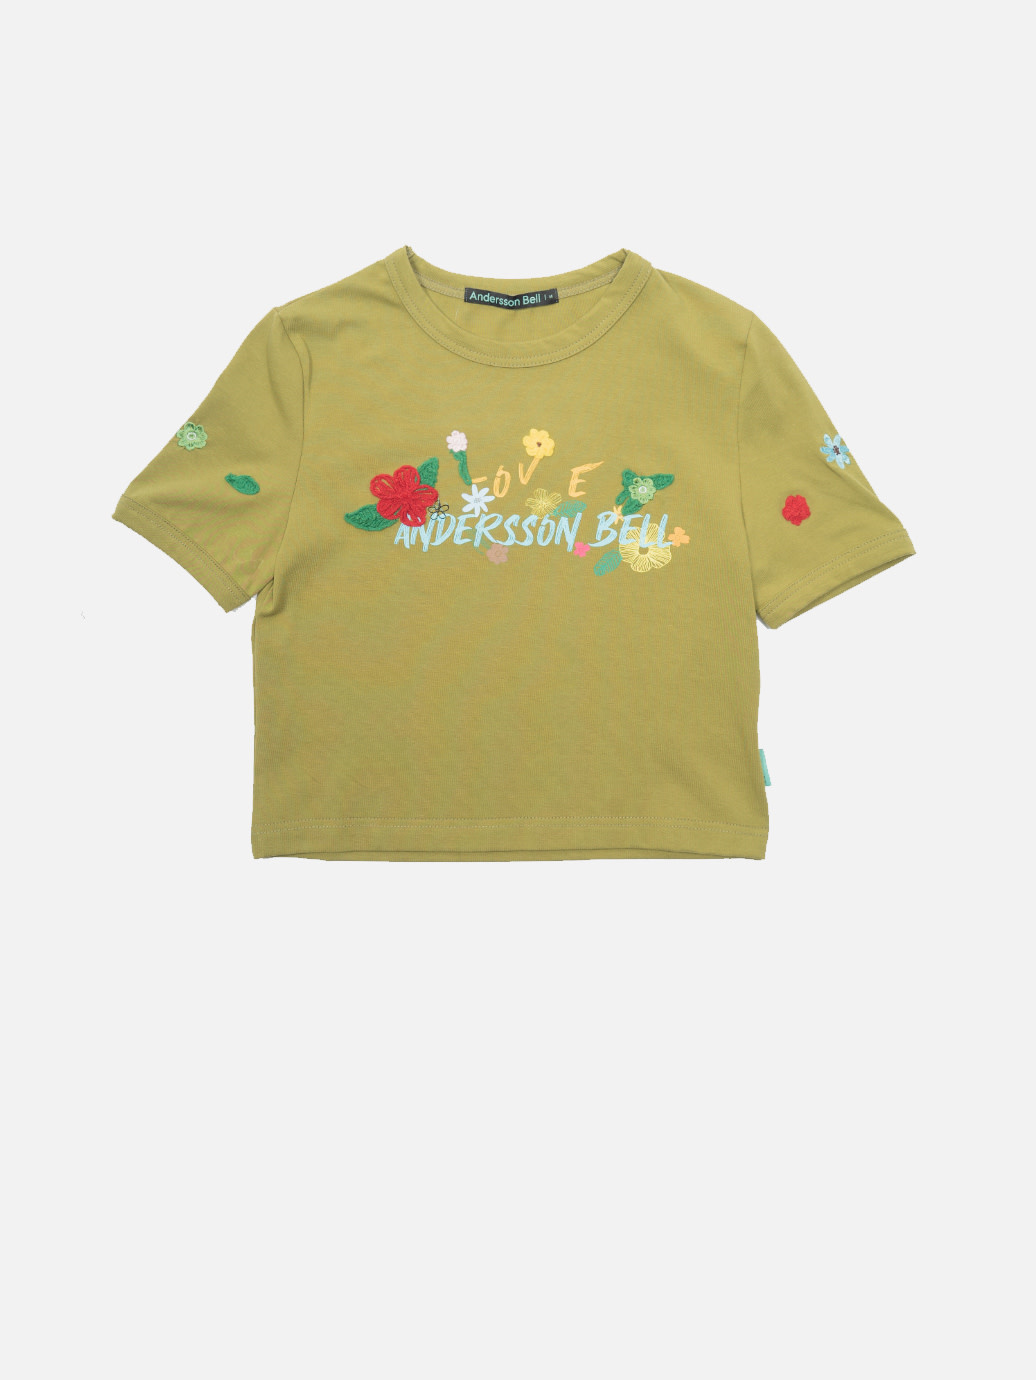 Andersson Bell (Women) Dasha Flower Garden Logo T-Shirt Khaki